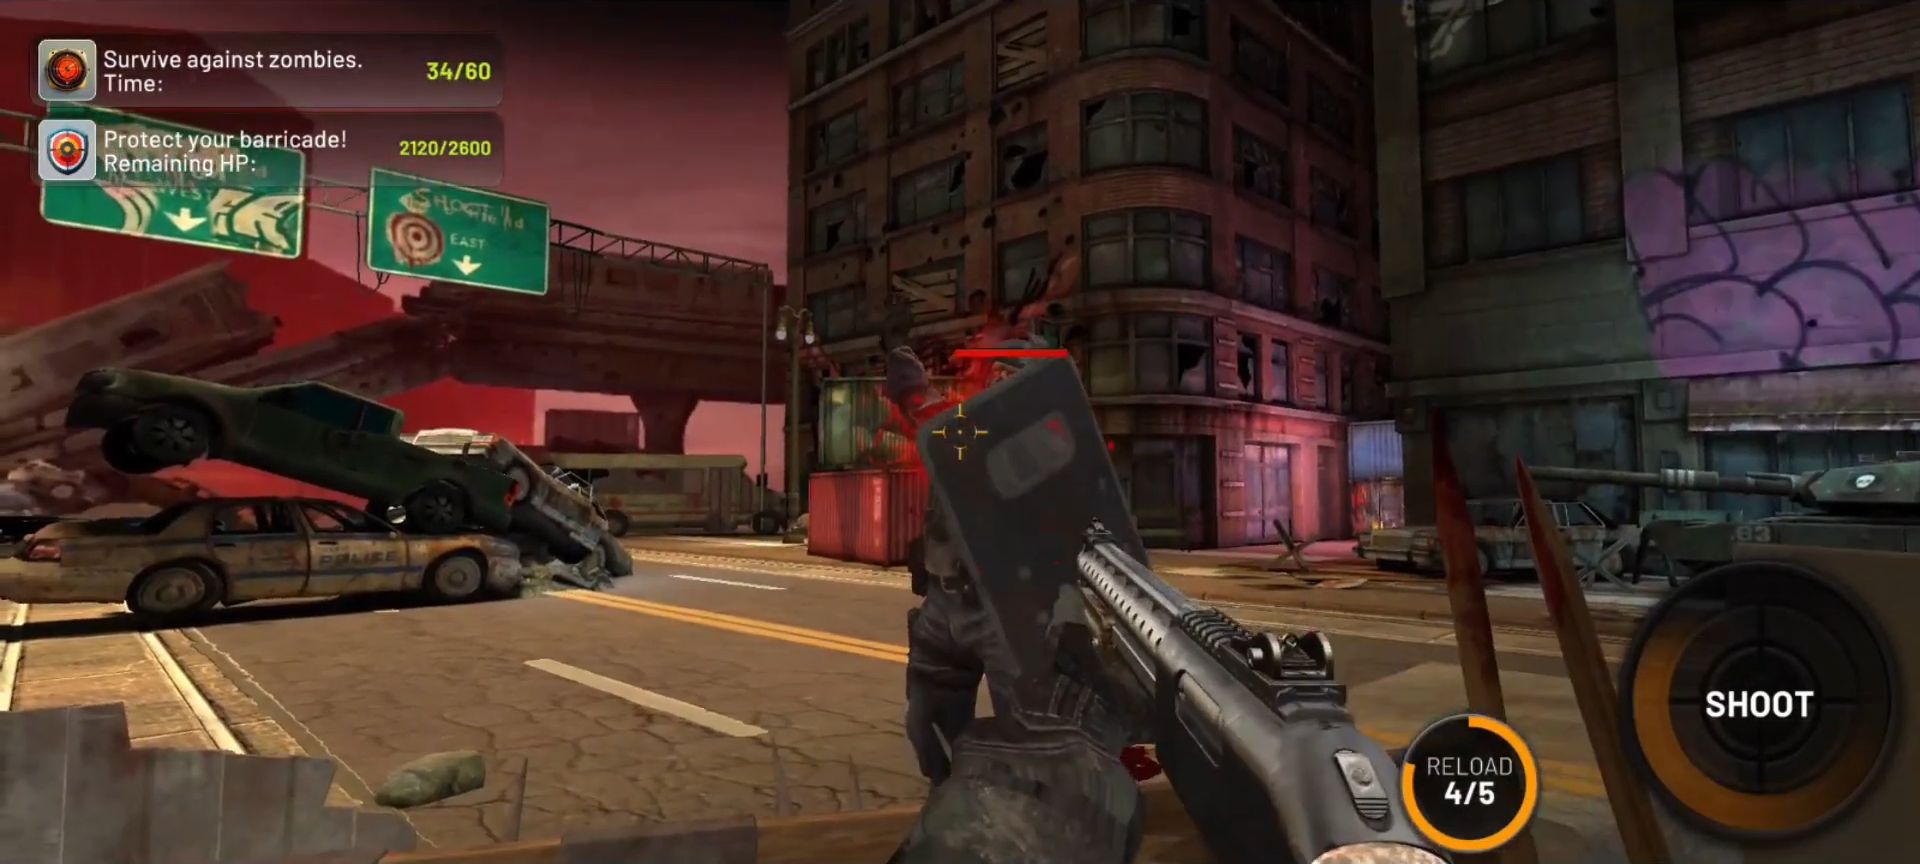 Скачать Deadlander: FPS Zombie Game: Android Online игра на телефон и планшет.